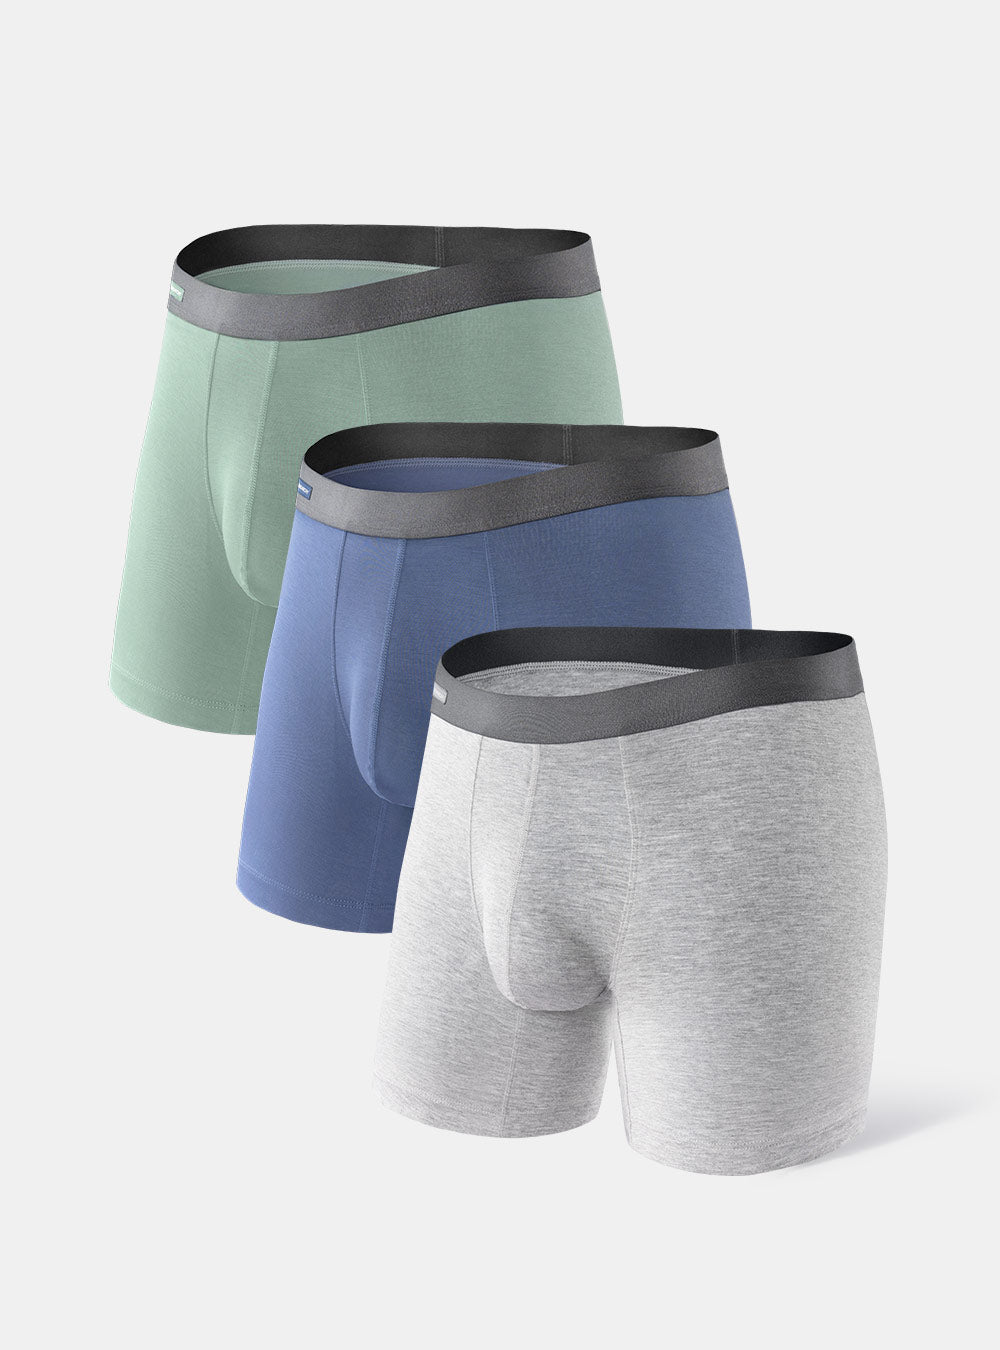  Men's Open-Front Adaptive Underwear - 3 Pack - Heather